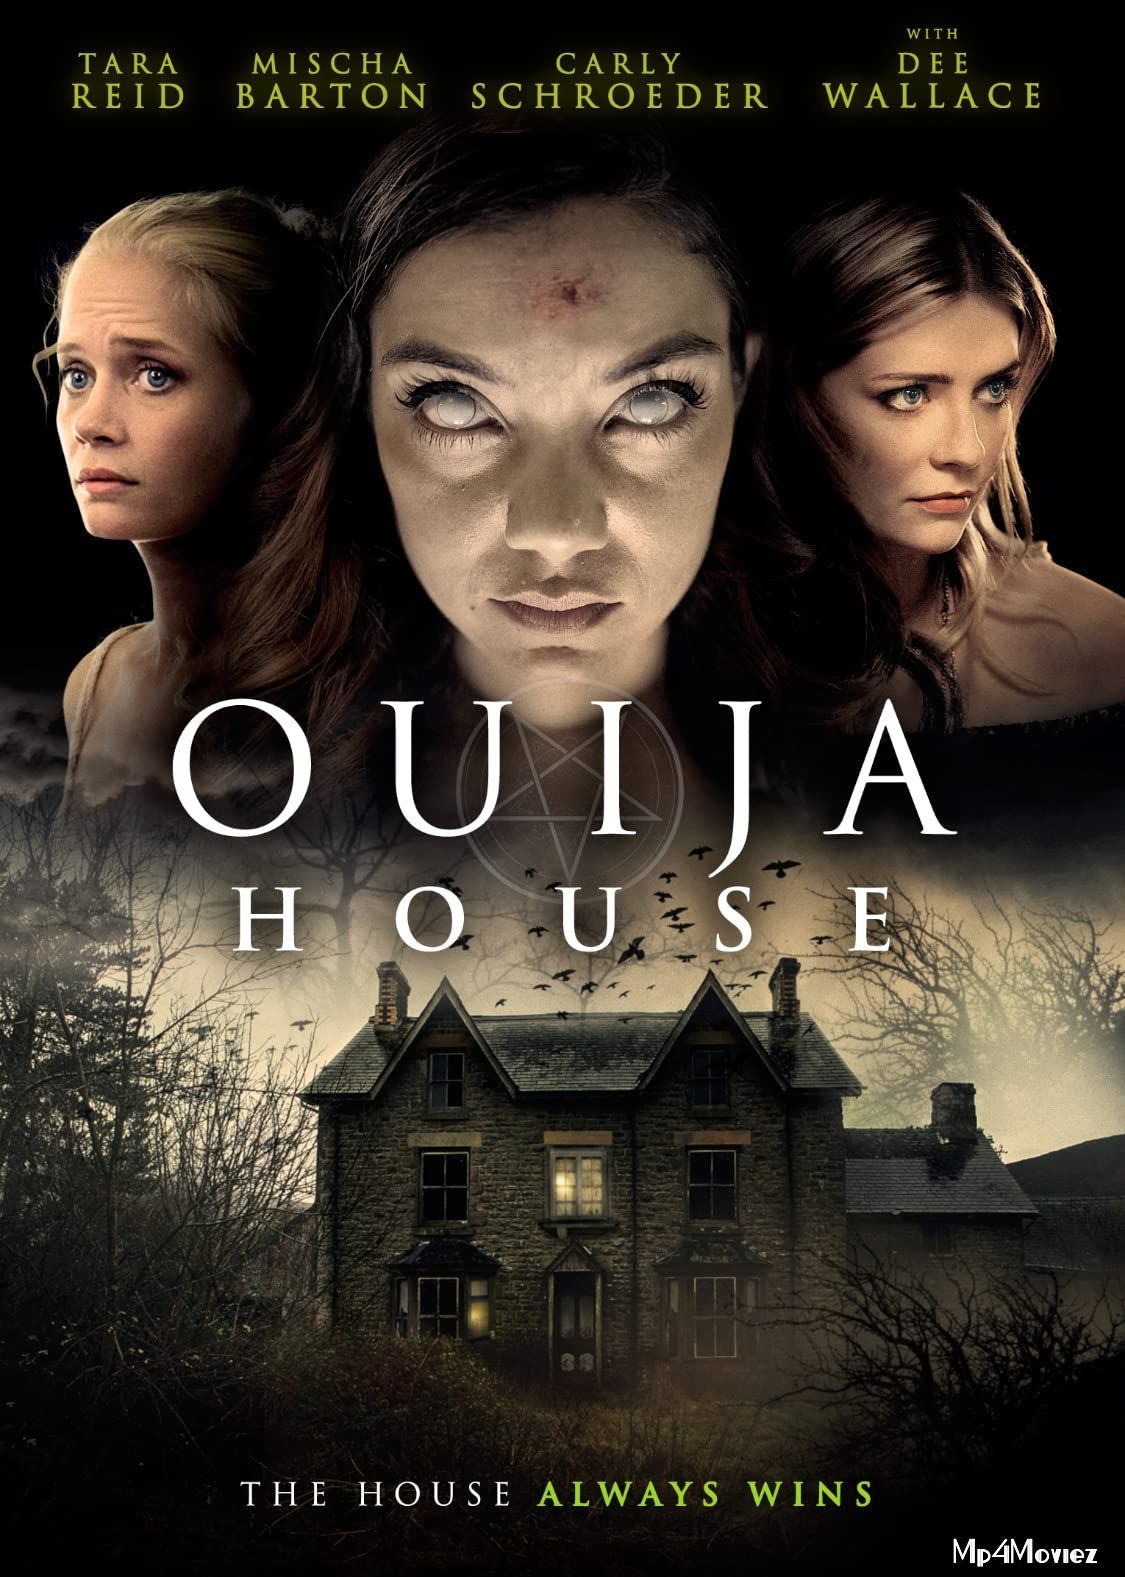 Ouija House (2018) Hindi Dubbed BluRay download full movie